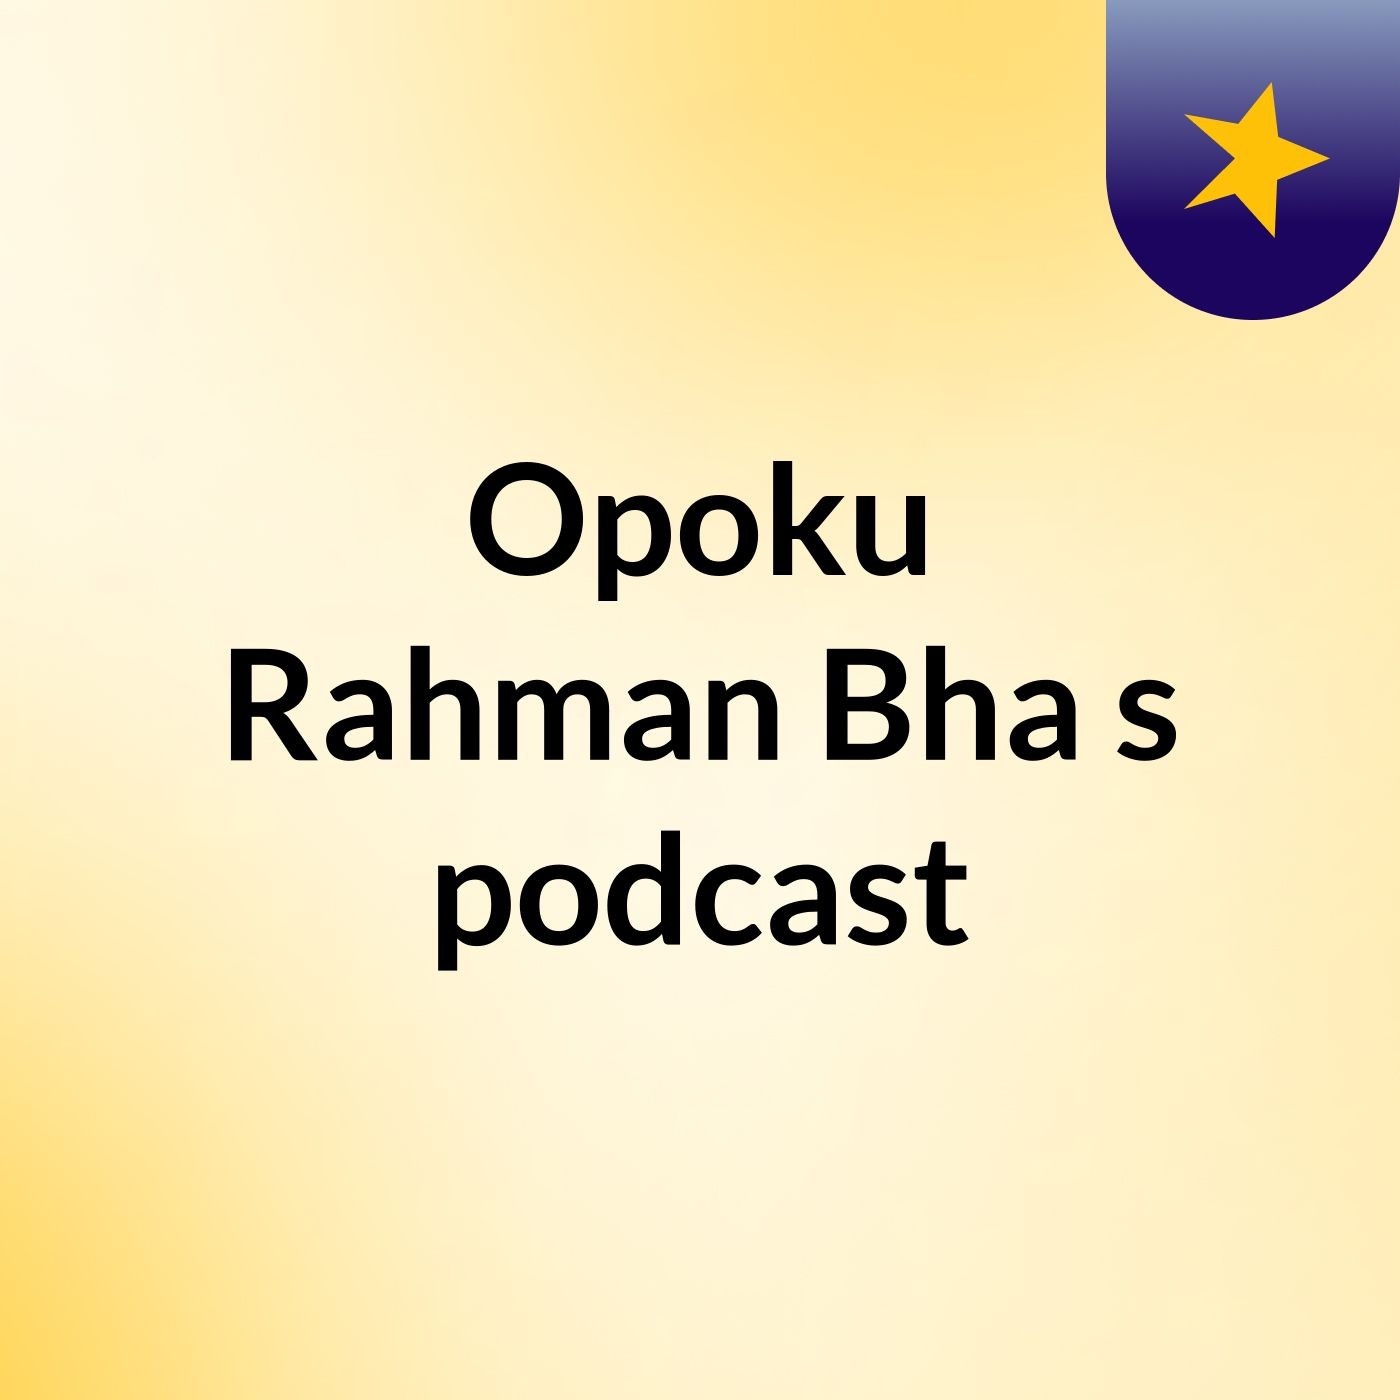 Opoku Rahman Bha's podcast